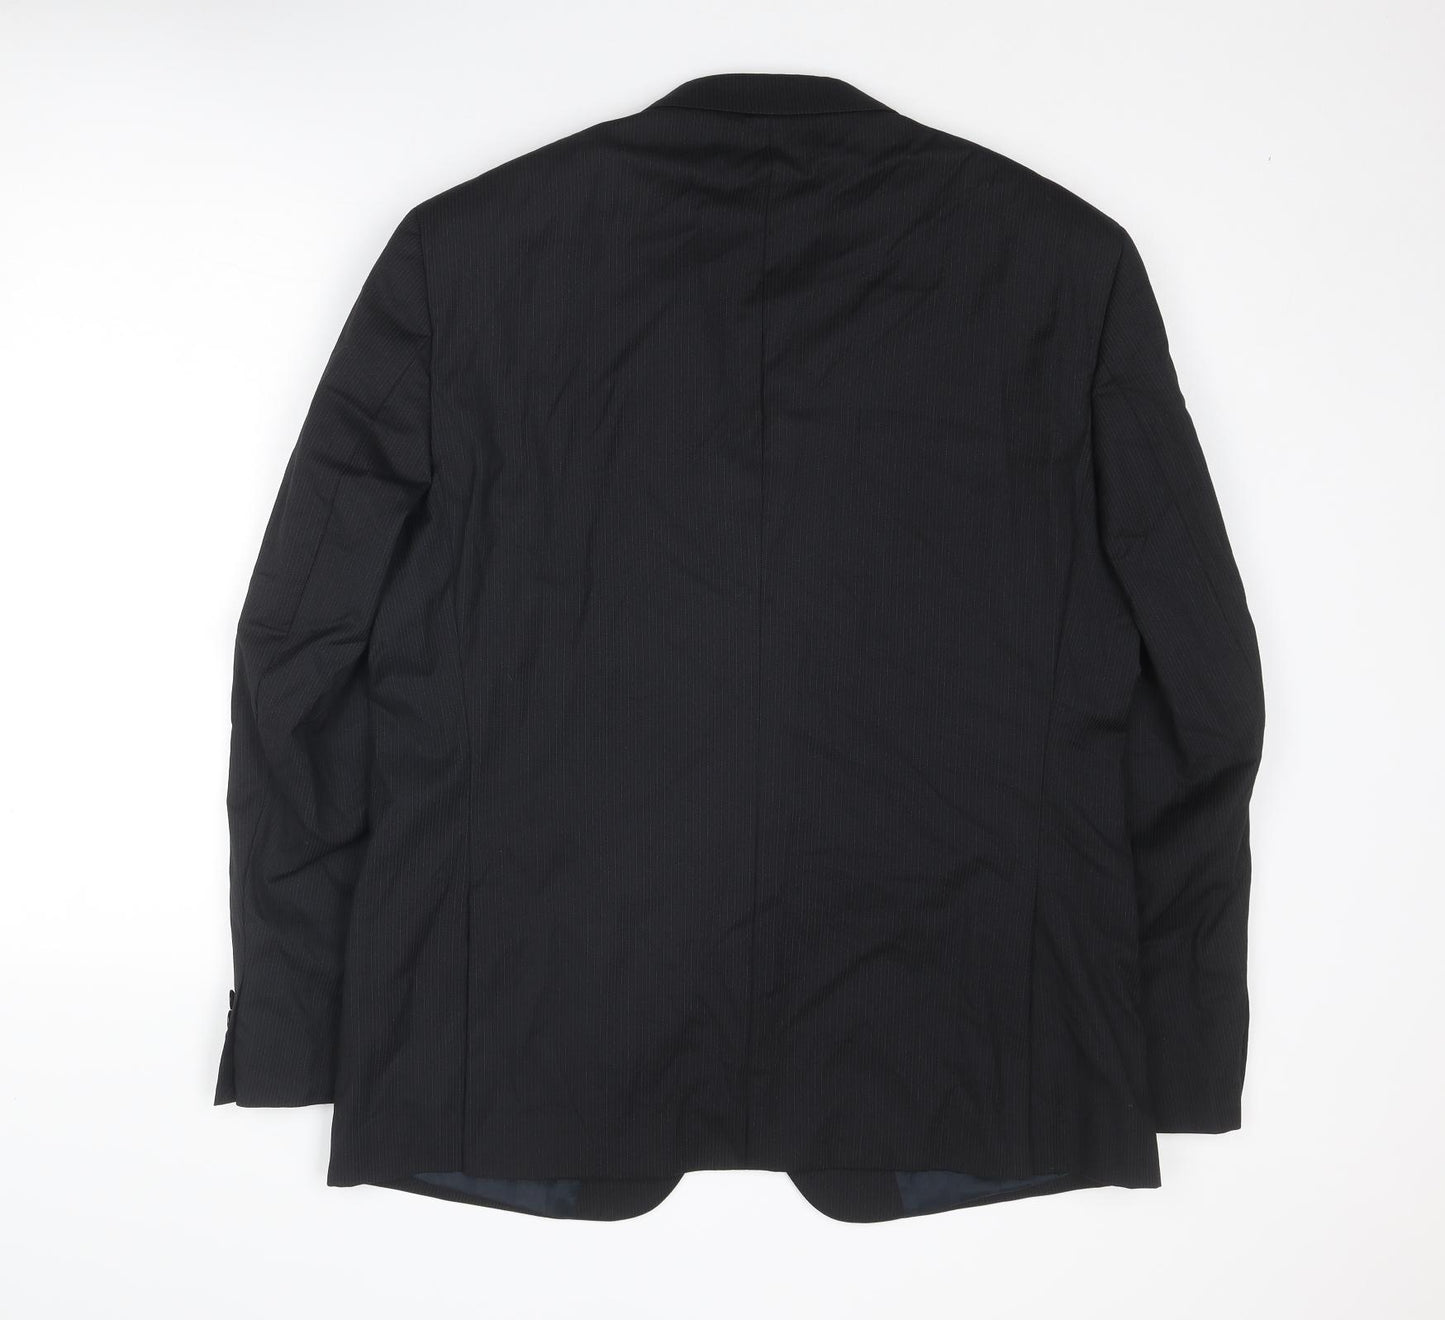 NEXT Mens Black Striped Wool Jacket Suit Jacket Size 44 Regular